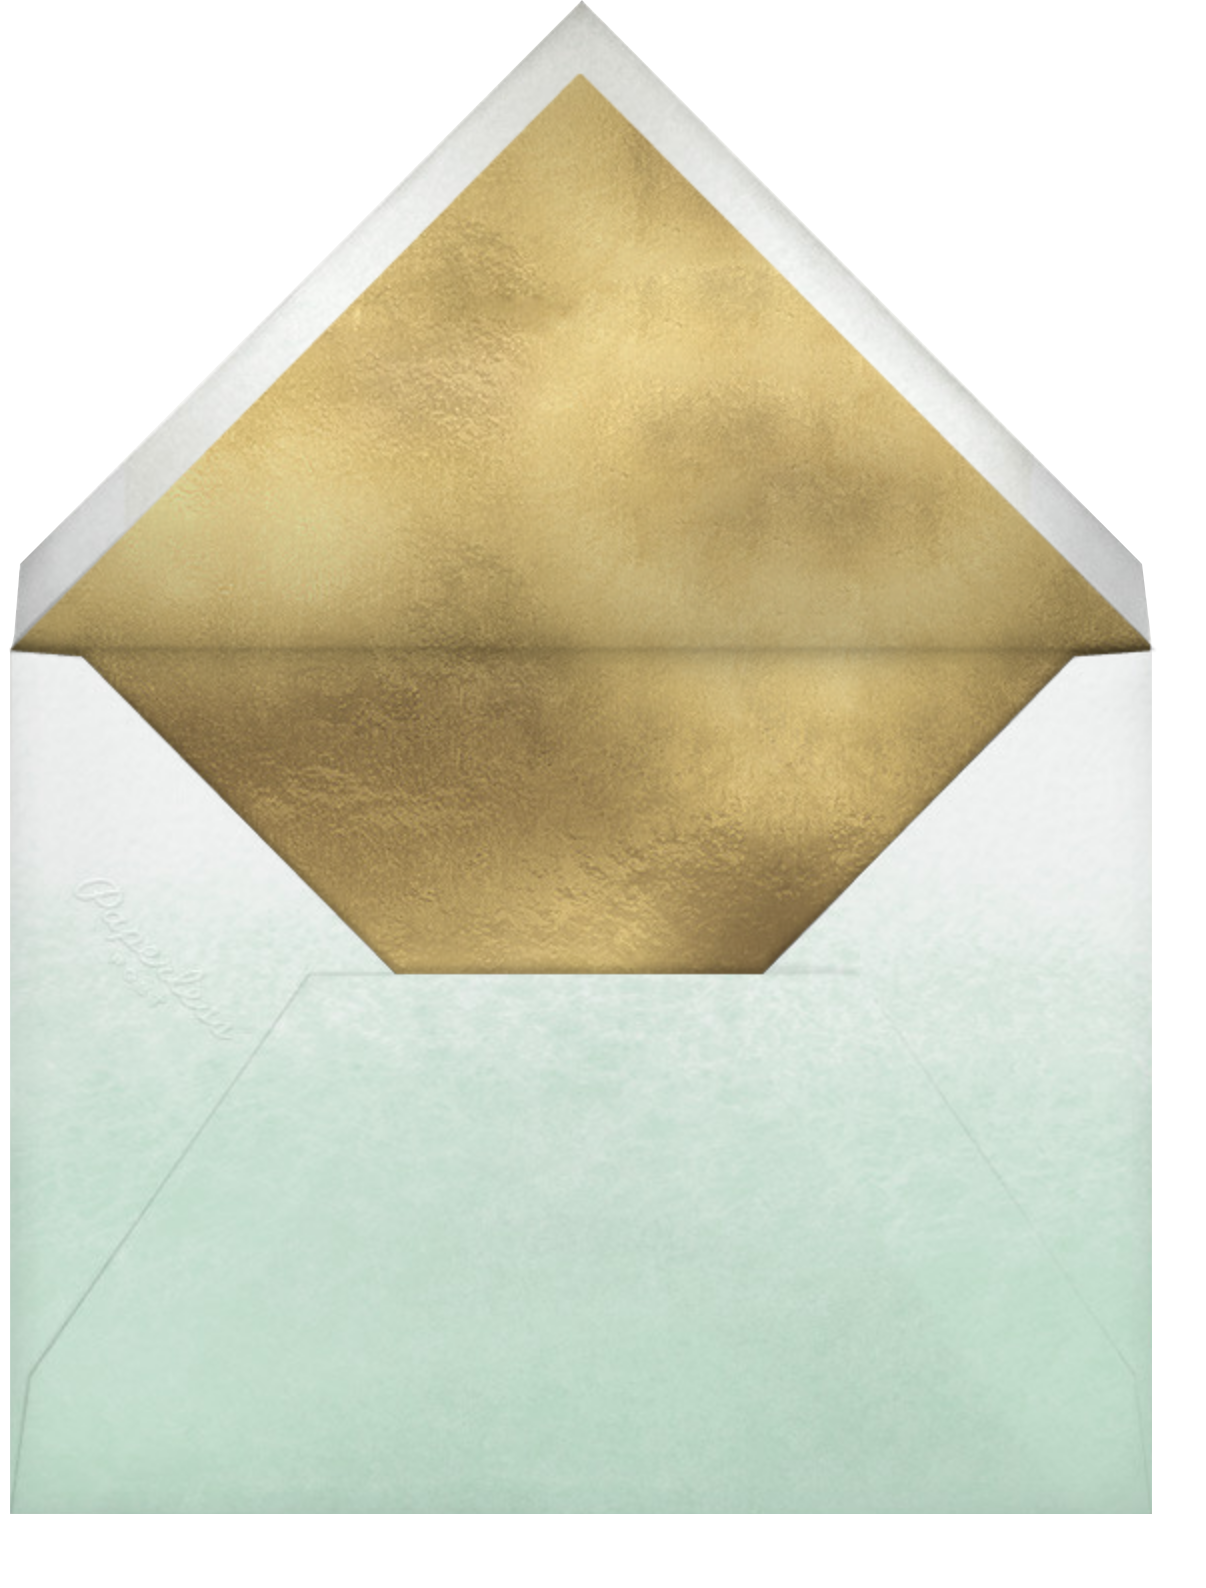 Draped Cross - Paperless Post - Envelope